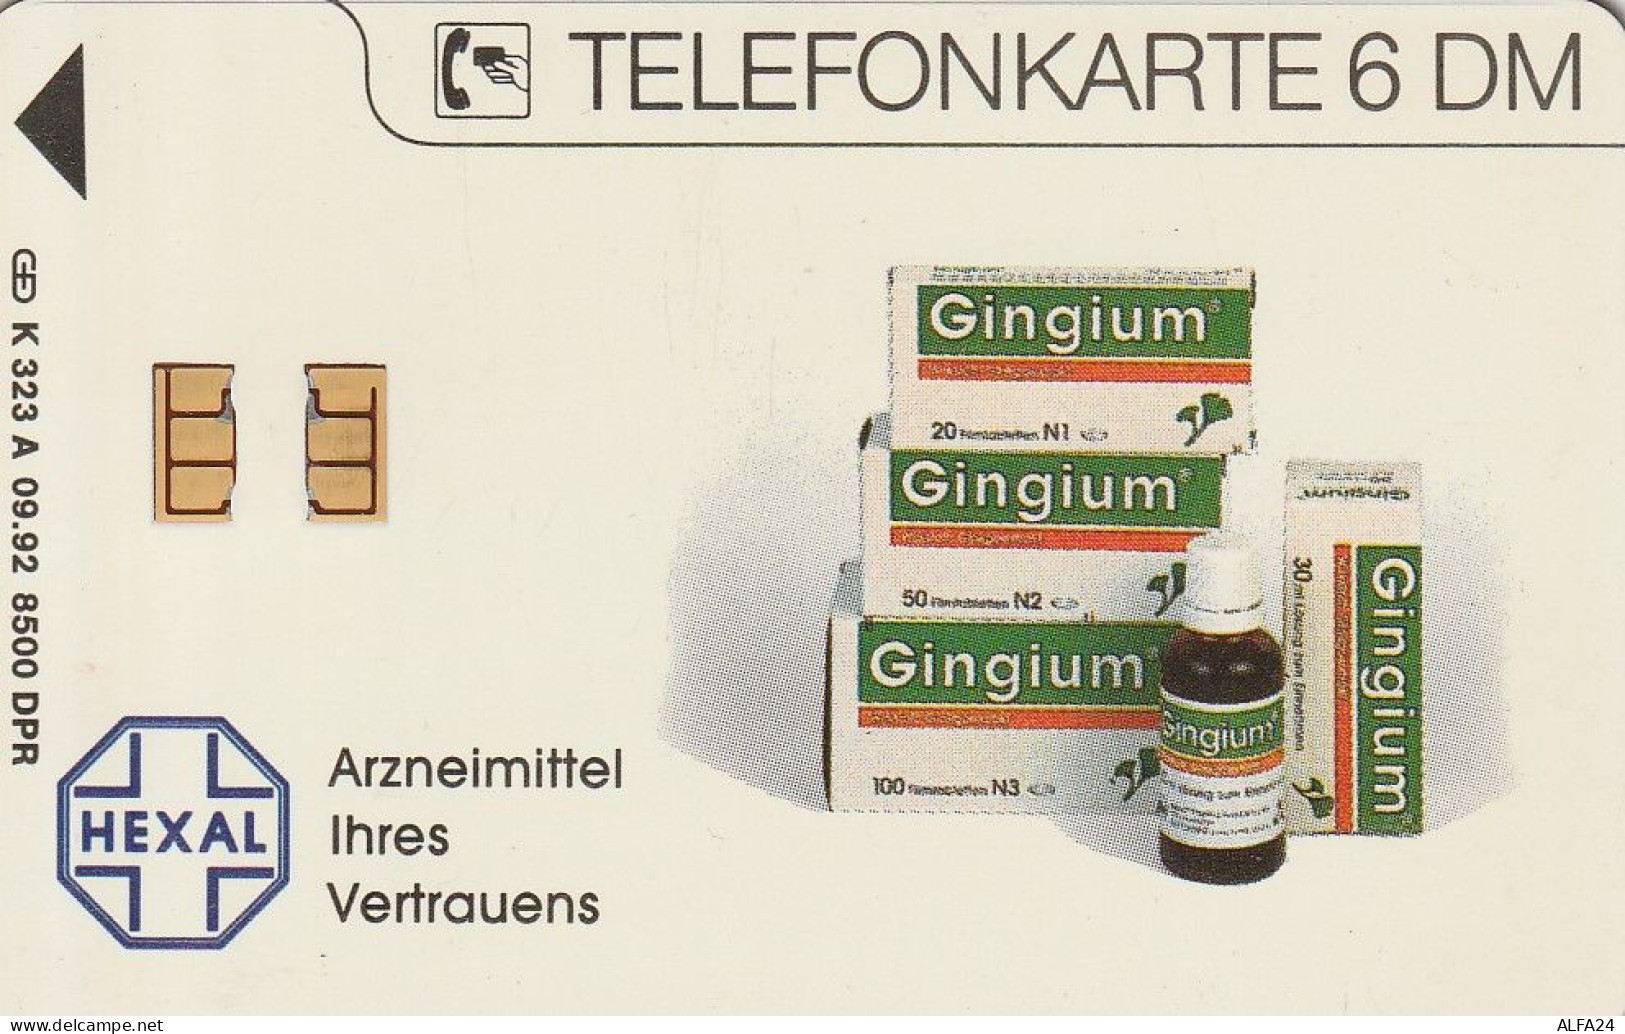 PHONE CARD GERMANIA SERIE A TIR.8500 (E79.41.8 - A + AD-Serie : Pubblicitarie Della Telecom Tedesca AG